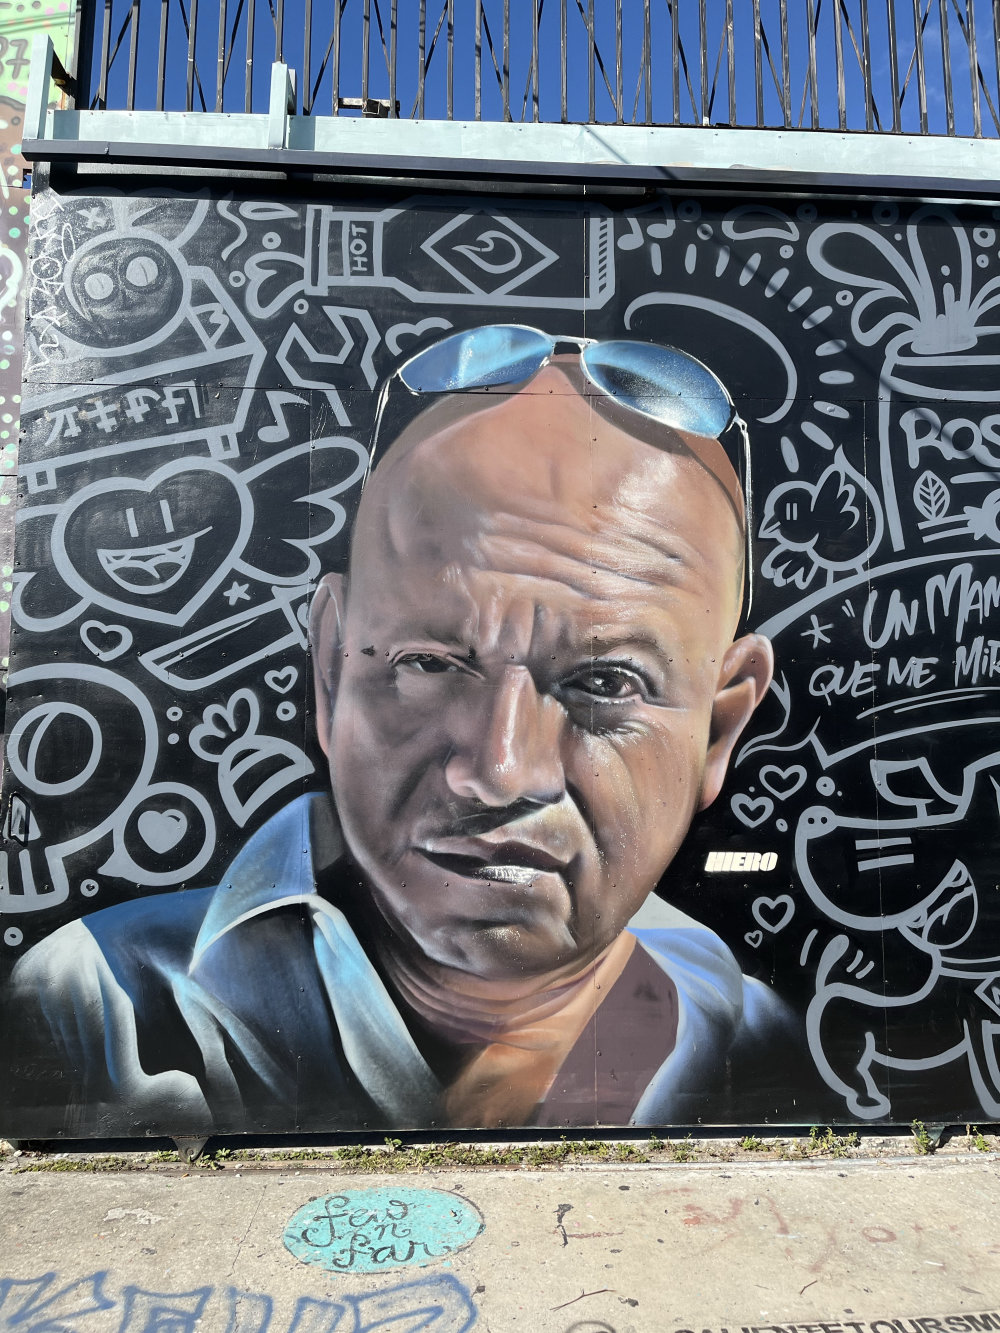 mural in Miami by artist Hiero Veiga.